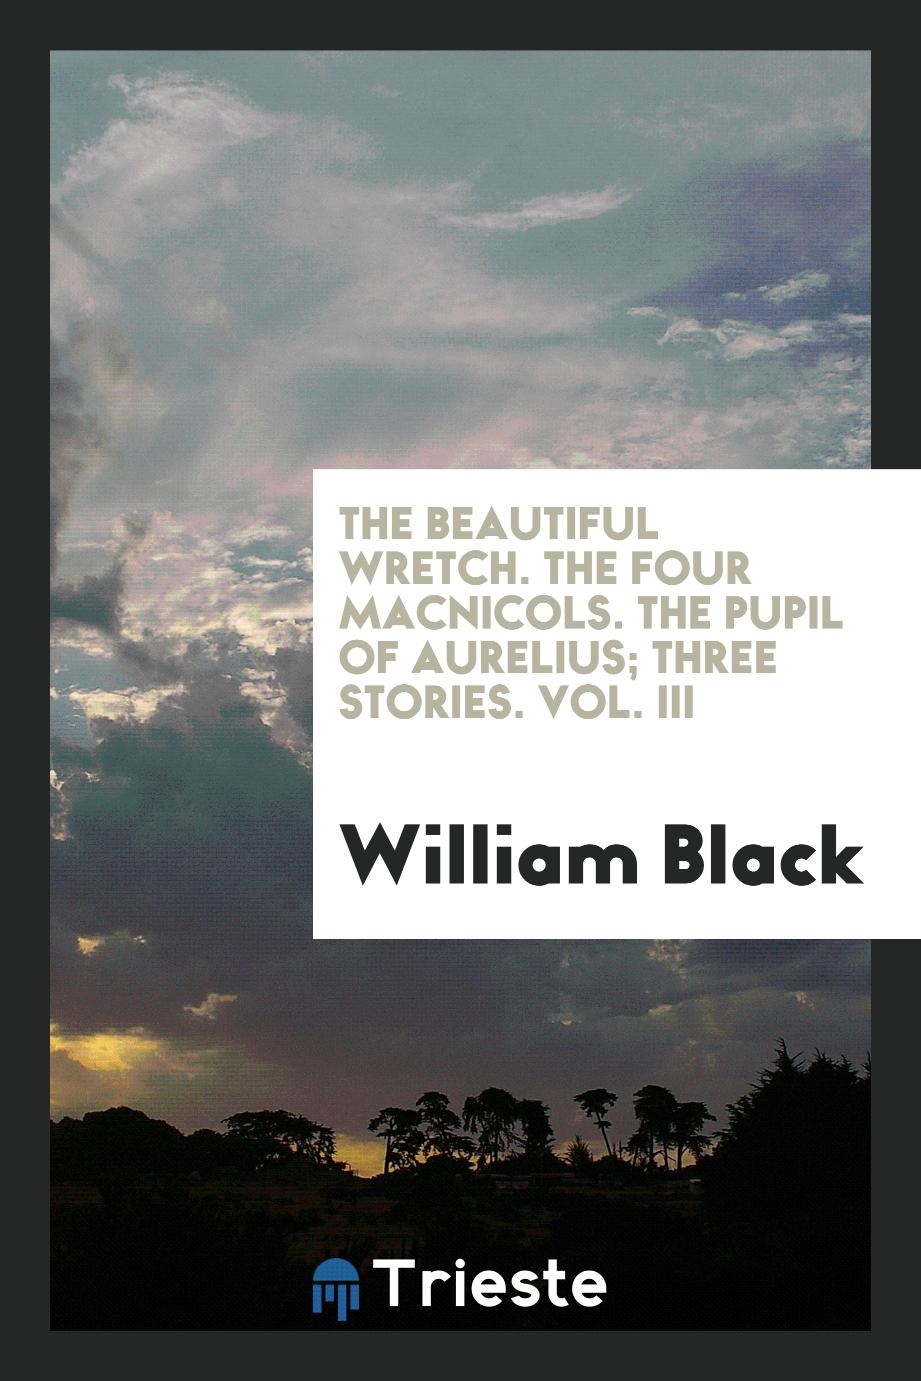 The beautiful wretch. The four MacNicols. The pupil of Aurelius; three stories. Vol. III